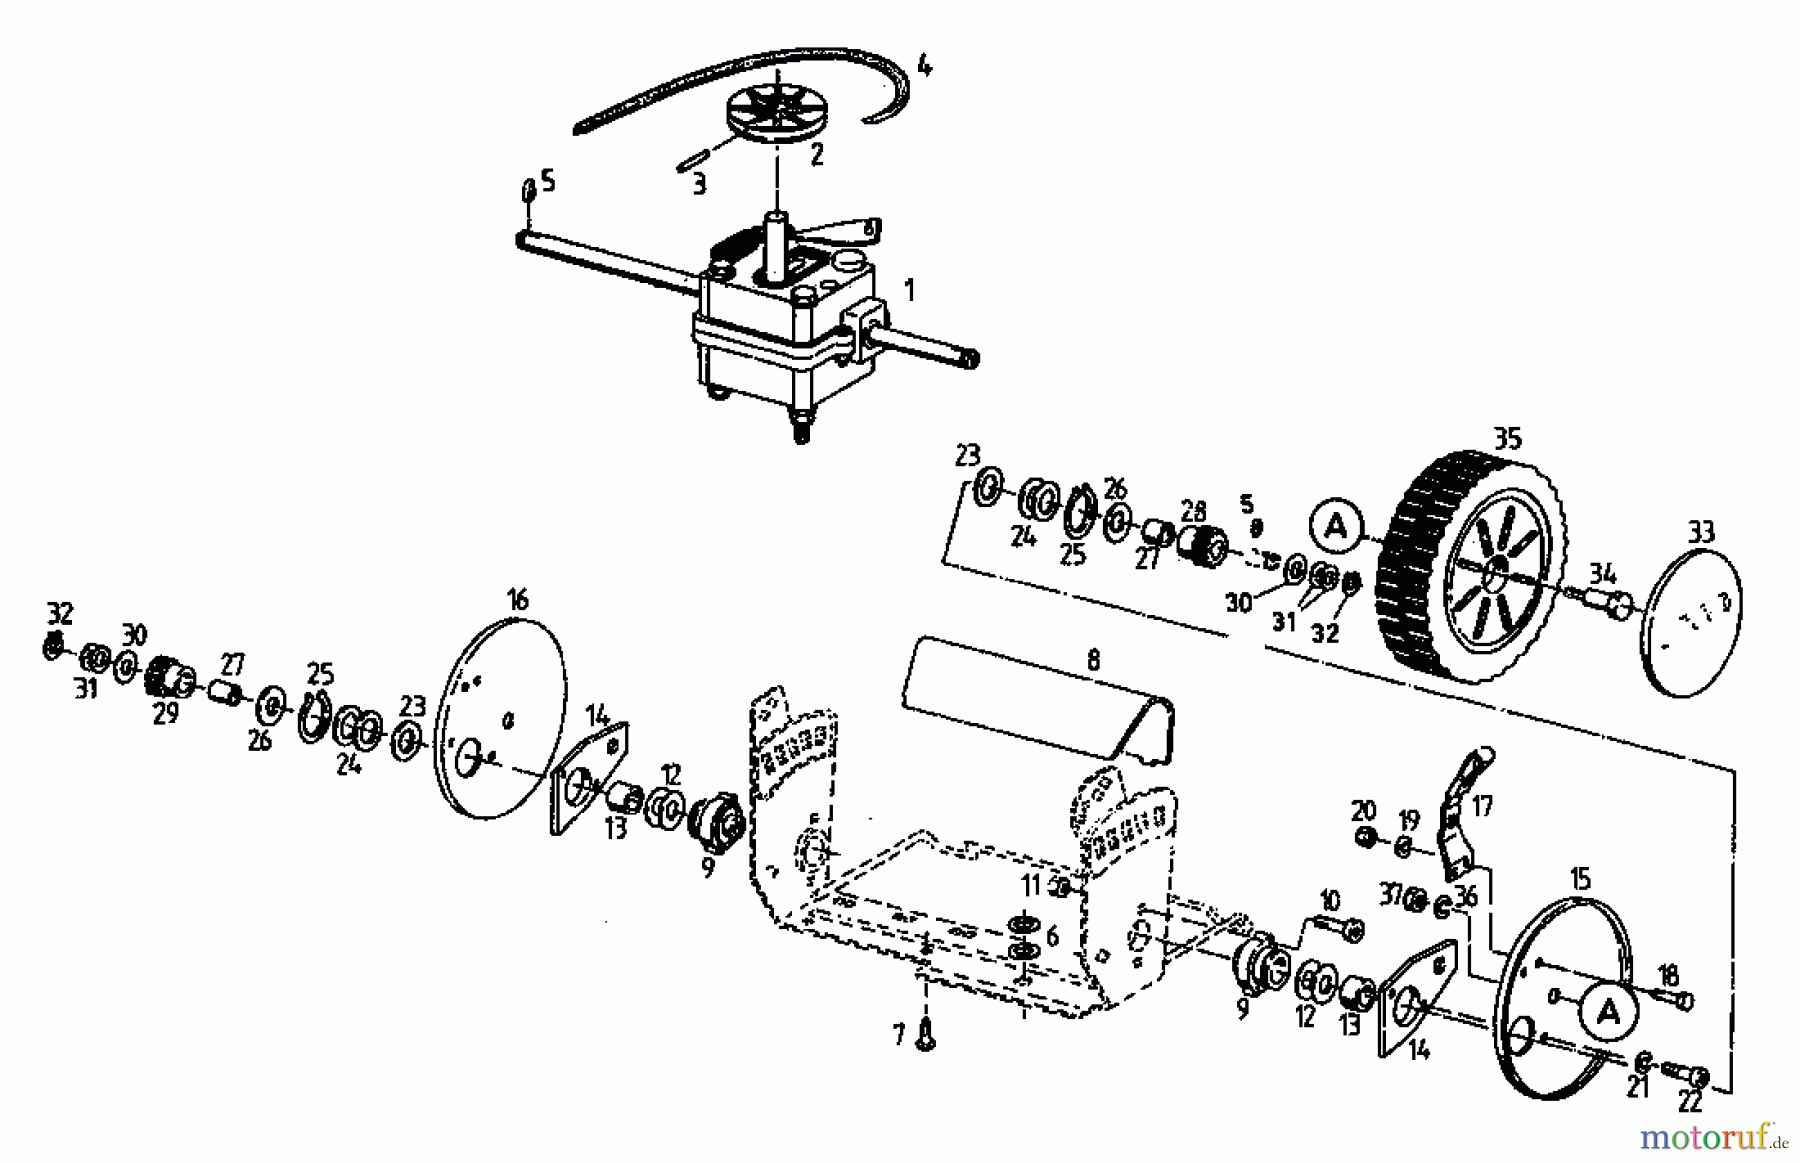  Golf Petrol mower self propelled Golf BRL 5 04054.03  (1996) Gearbox, Wheels, Cutting hight adjustment